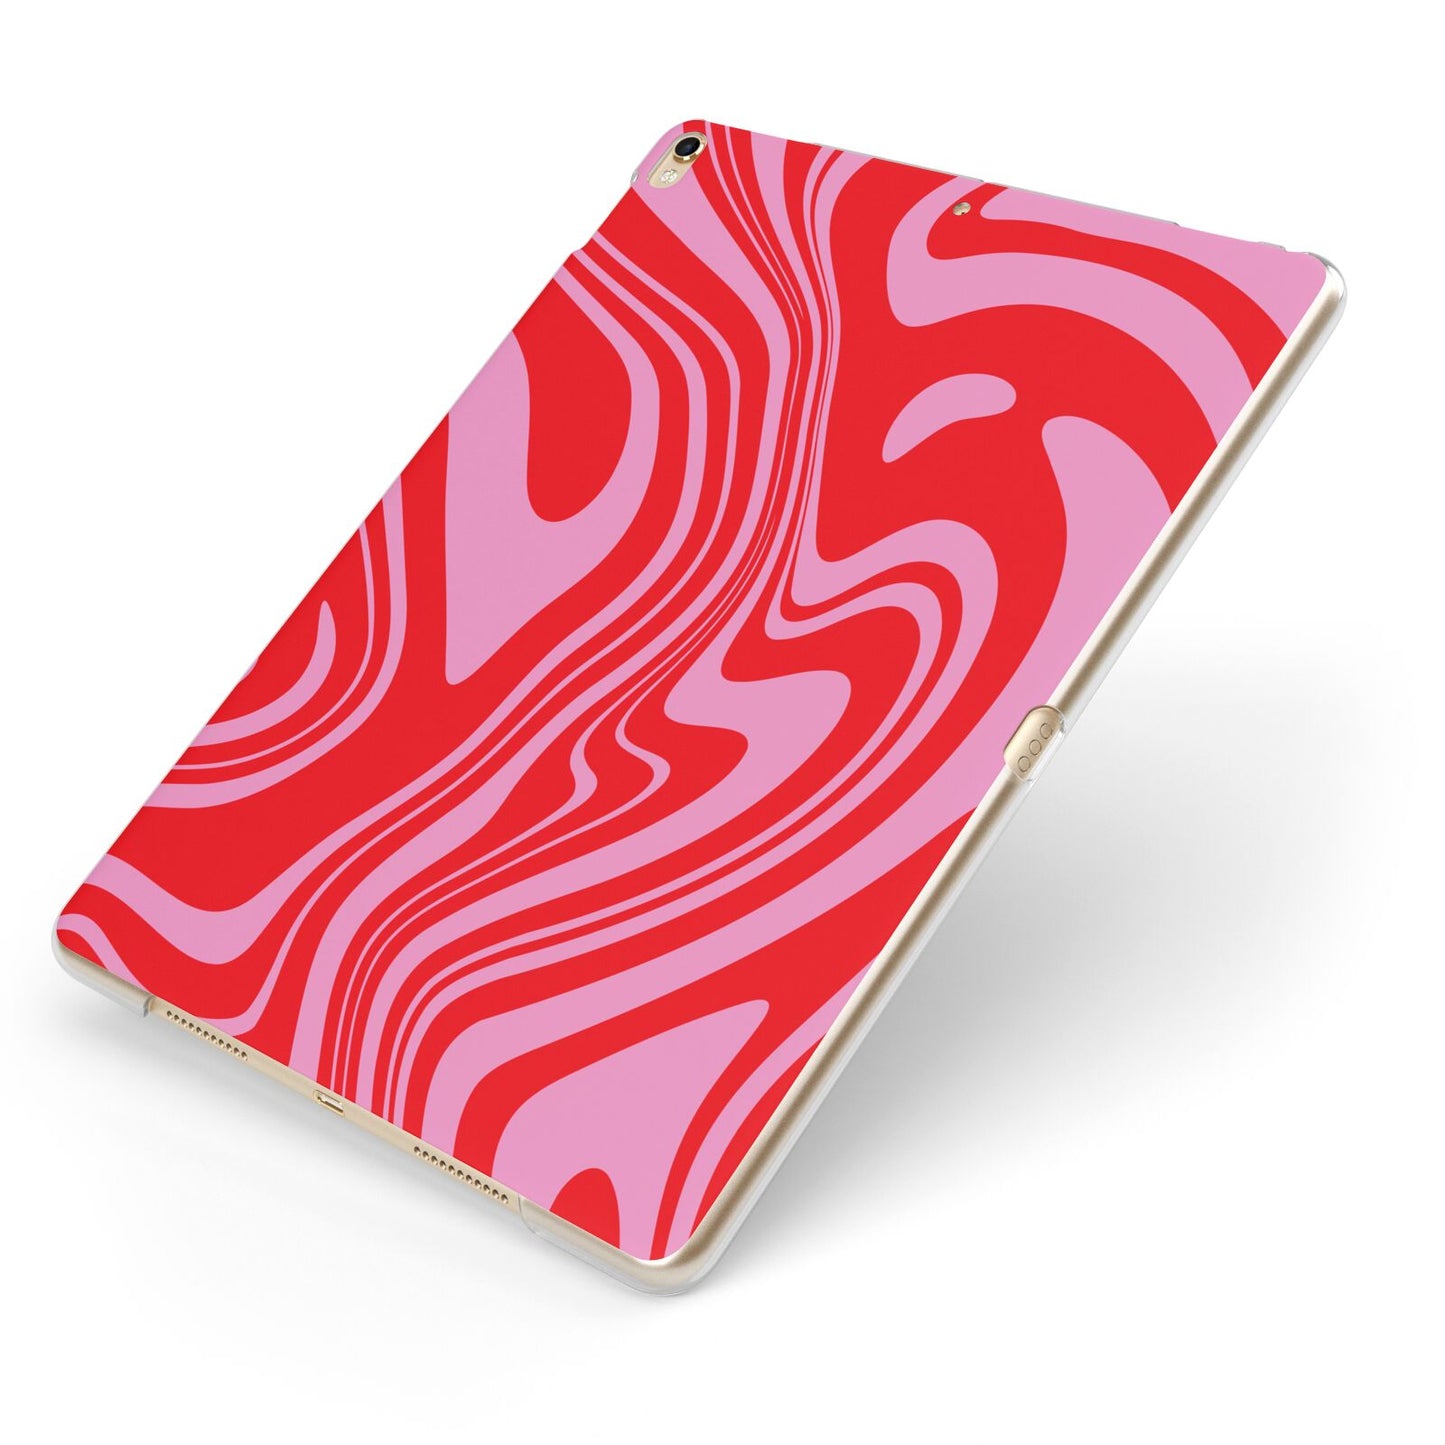 Red Swirl Apple iPad Case on Gold iPad Side View